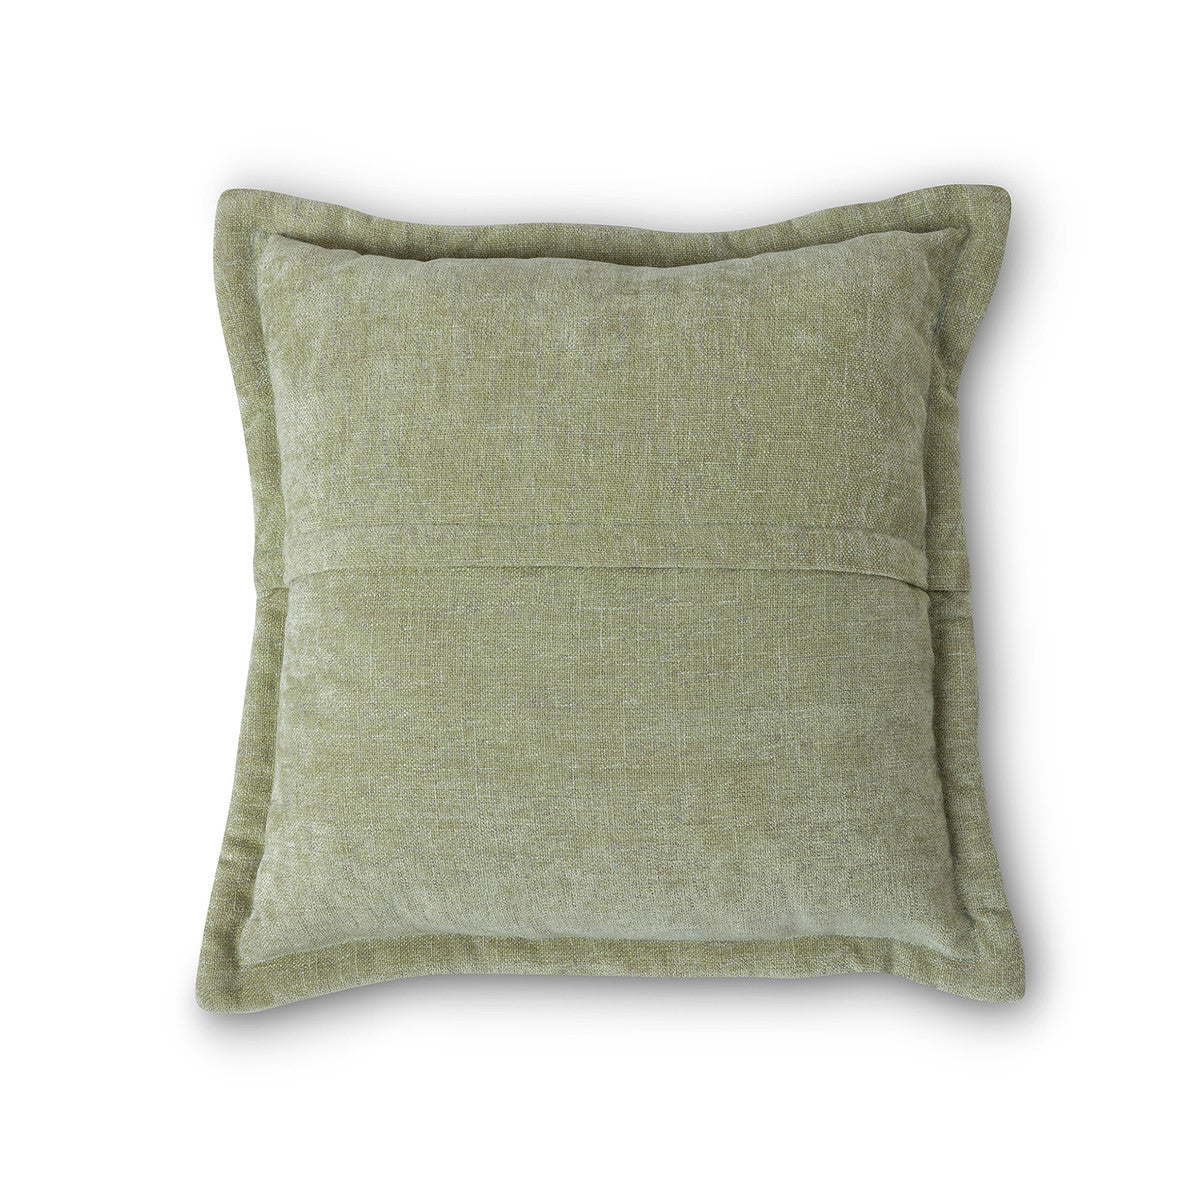 pistachio green velvet throw pillow on white background showing the back